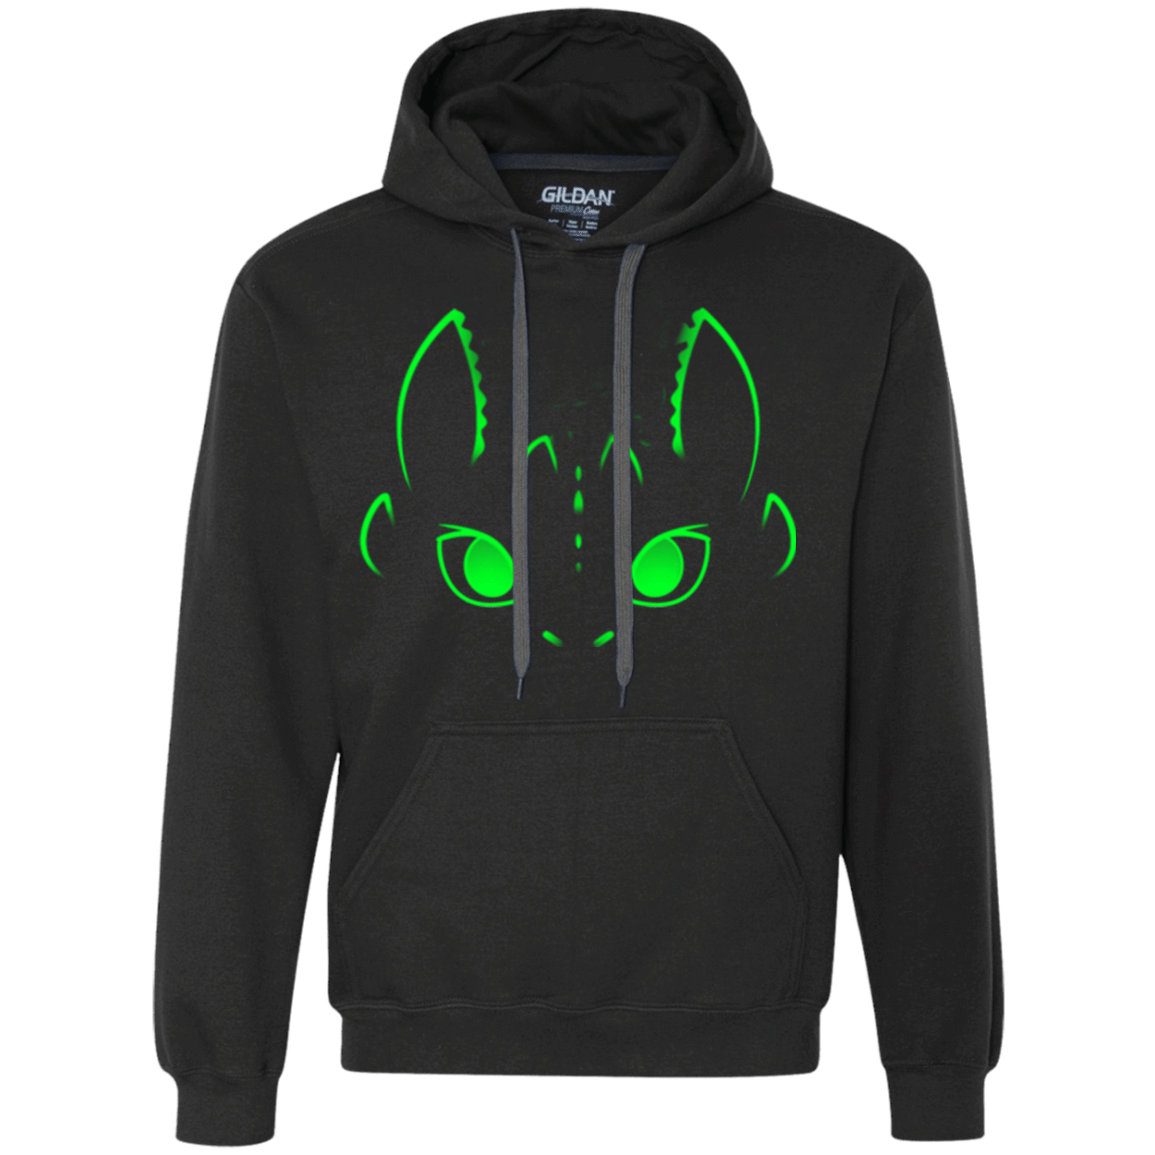 Sweatshirts Black / Small Neon Toothless Premium Fleece Hoodie